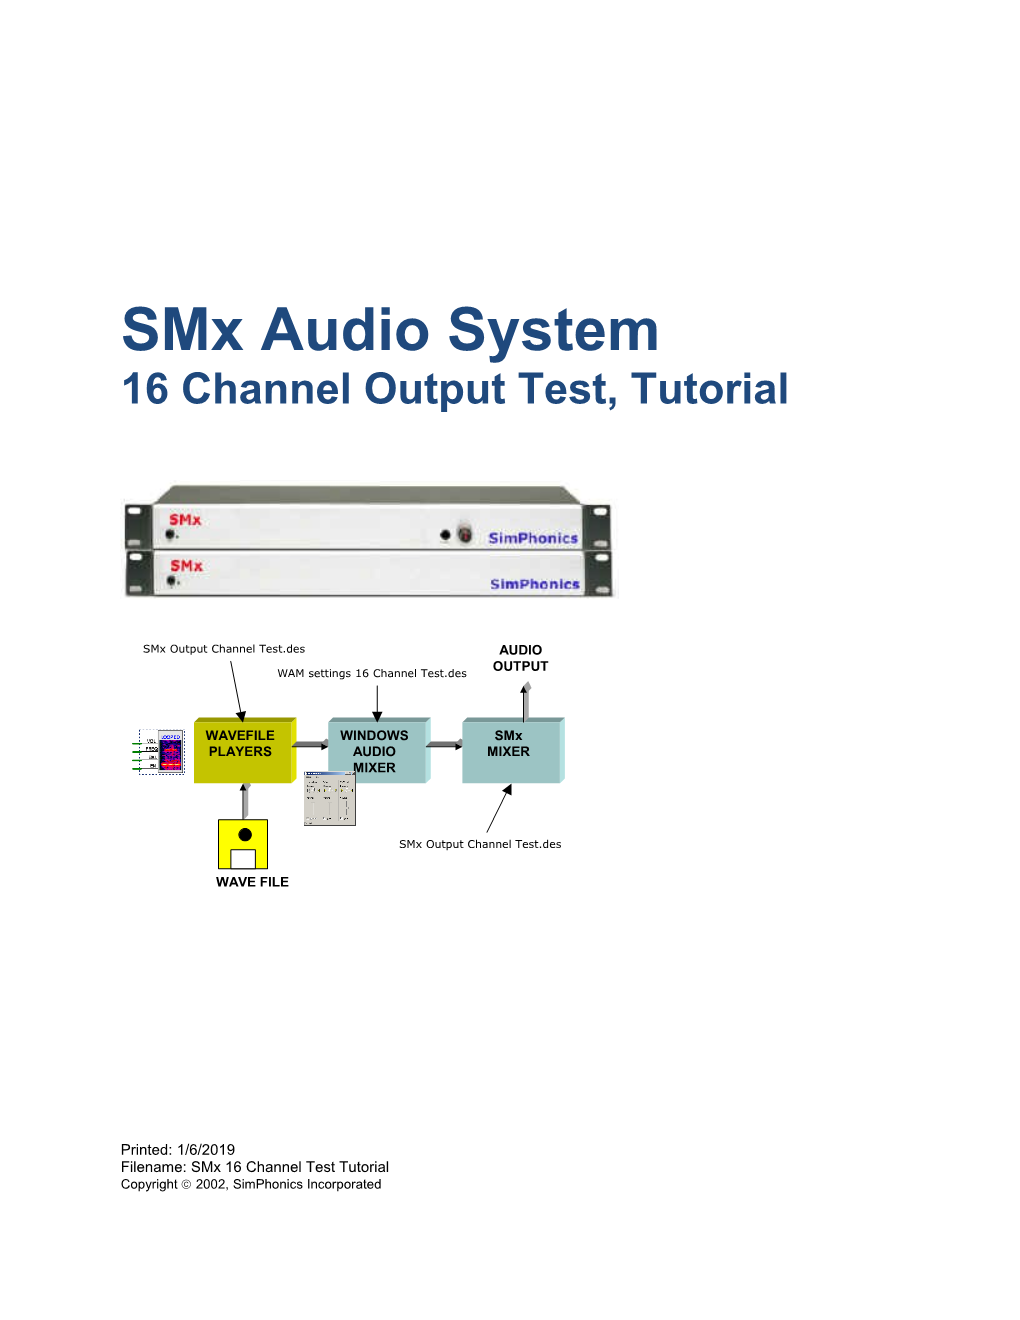 Smx 16 Channel Test Tutorial